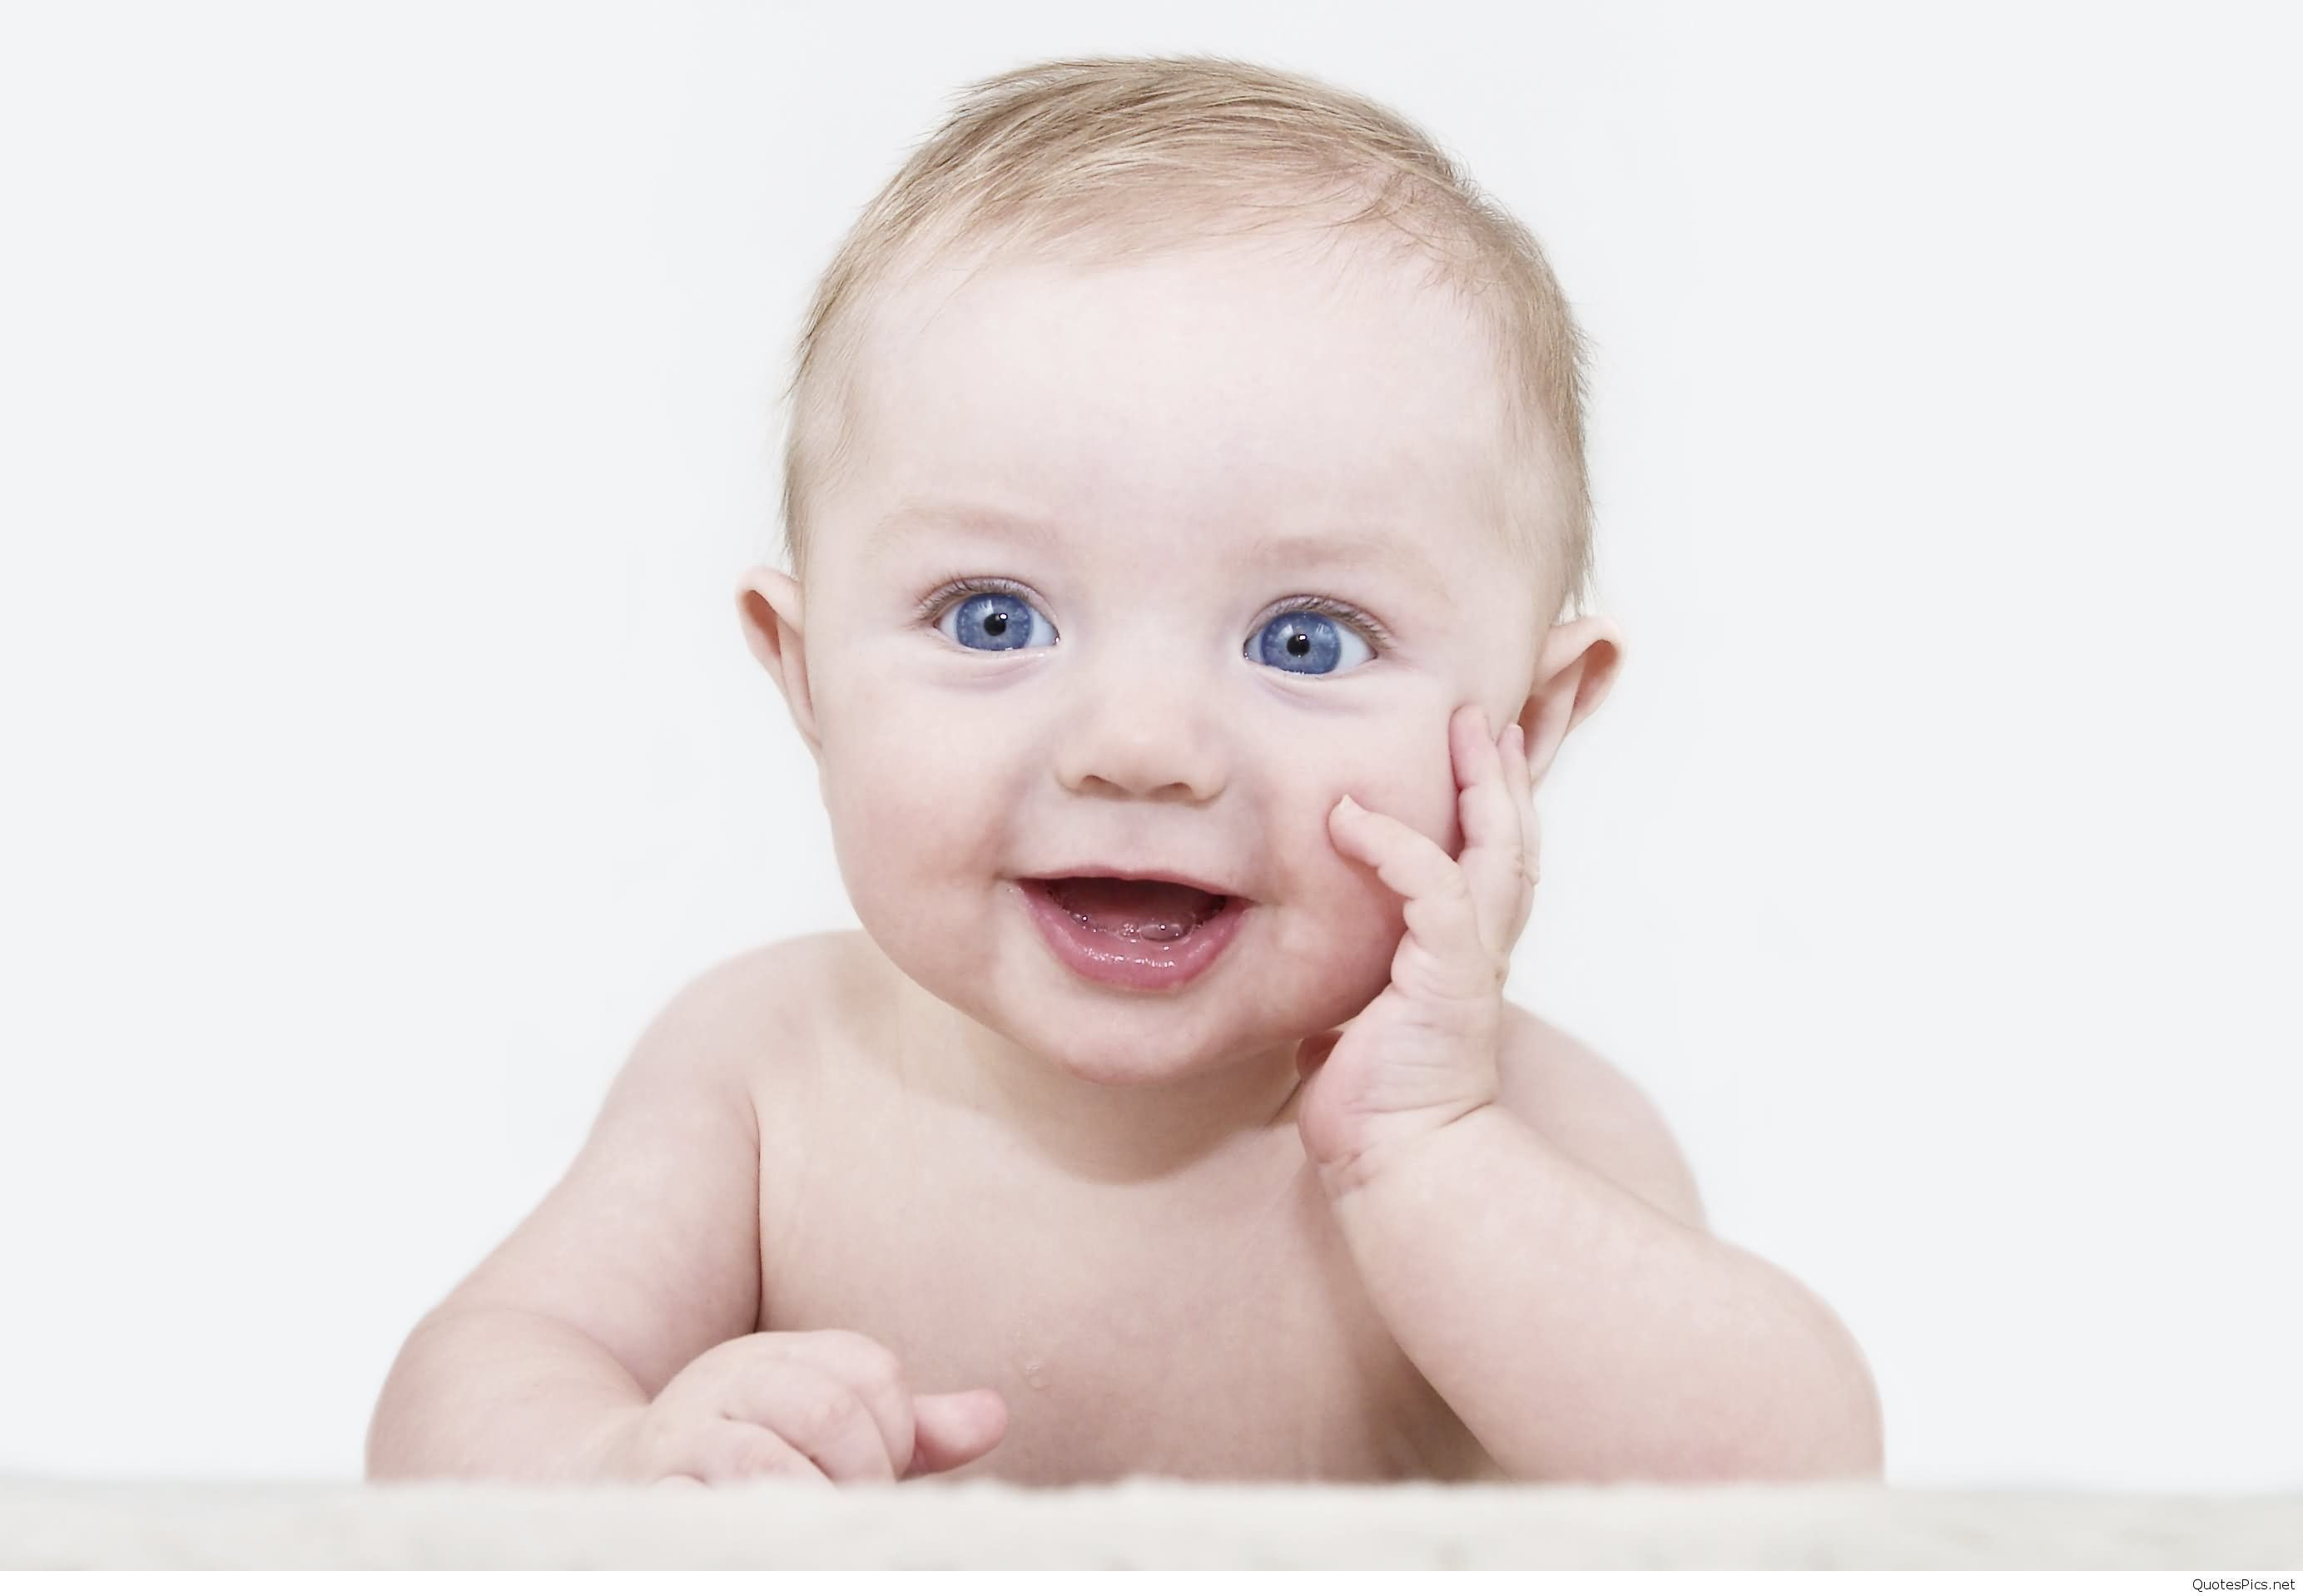 2767x1918, Cute Boy Baby Wallpaper - Cute New Born Baby - 2767x1918  Wallpaper 